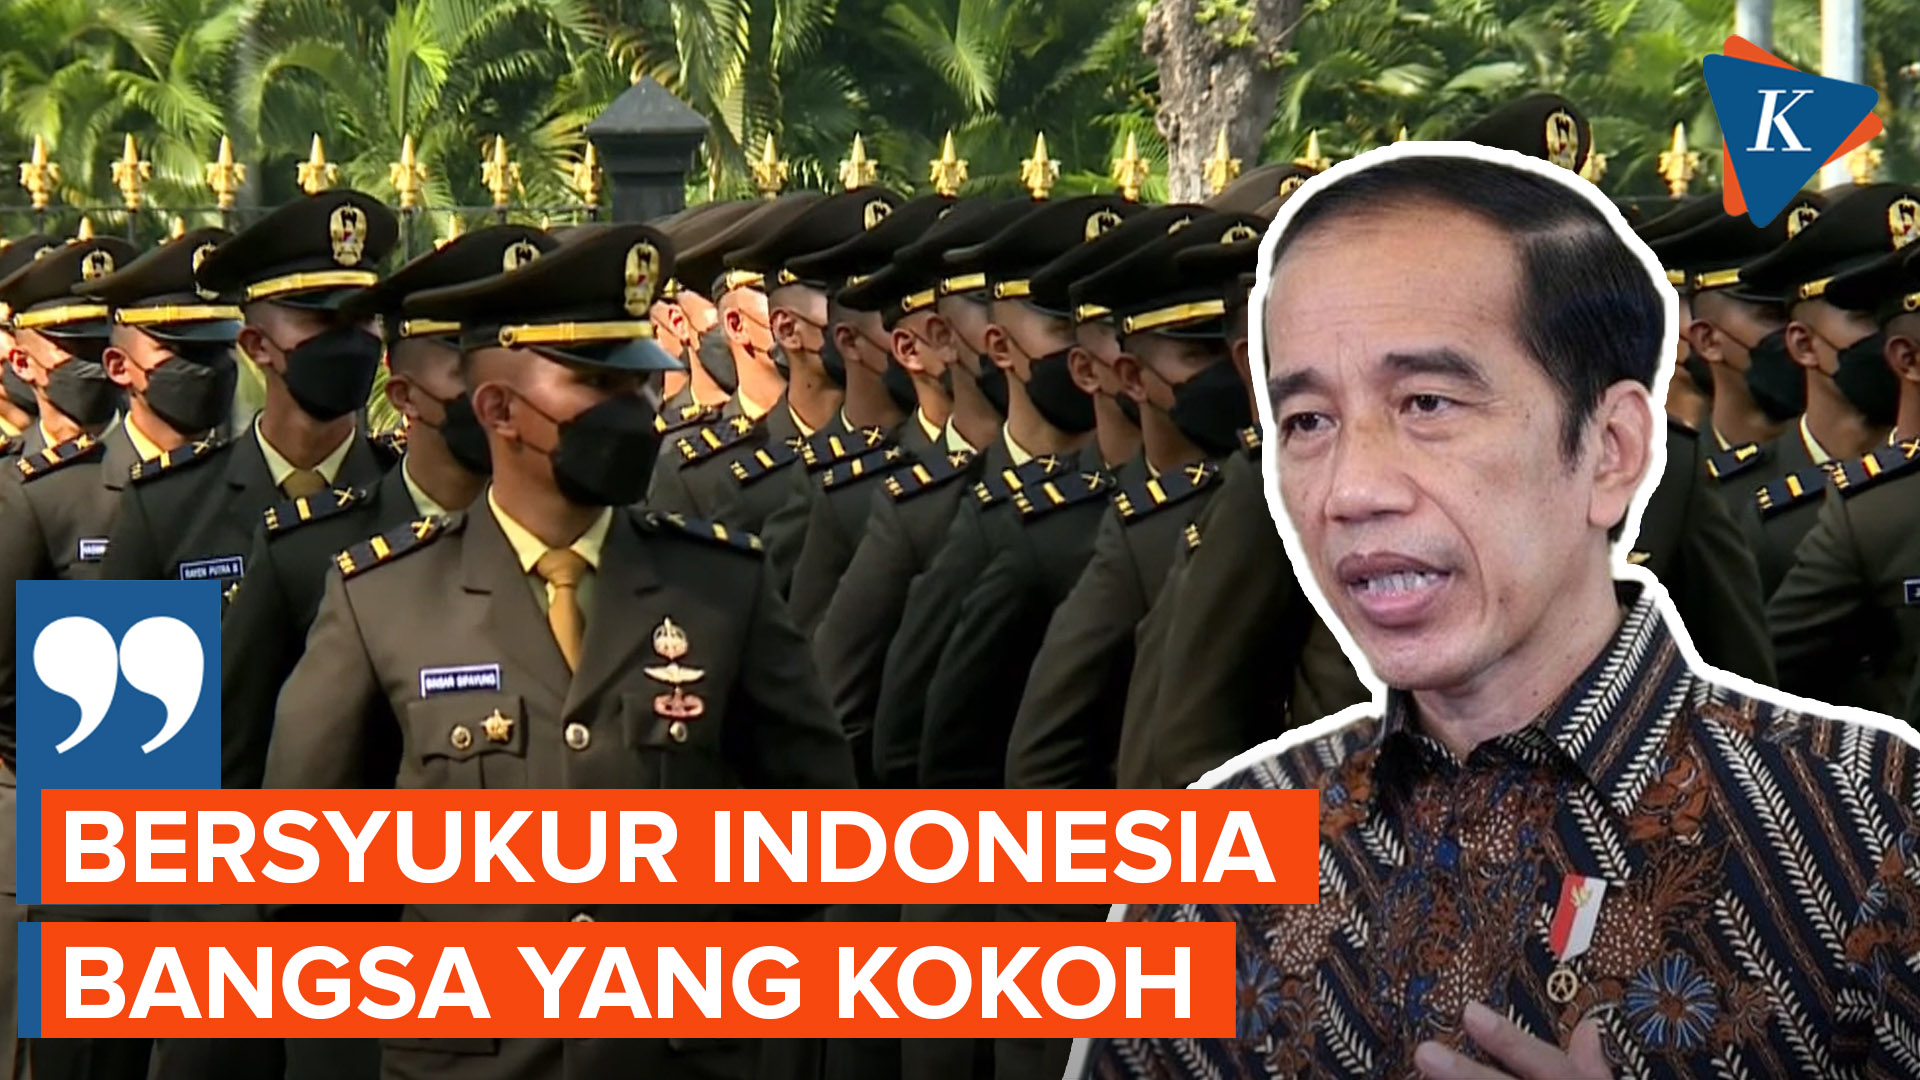 Jokowi Bahas Isu Perpecahan Dunia saat Melantik Perwira TNI dan Polri